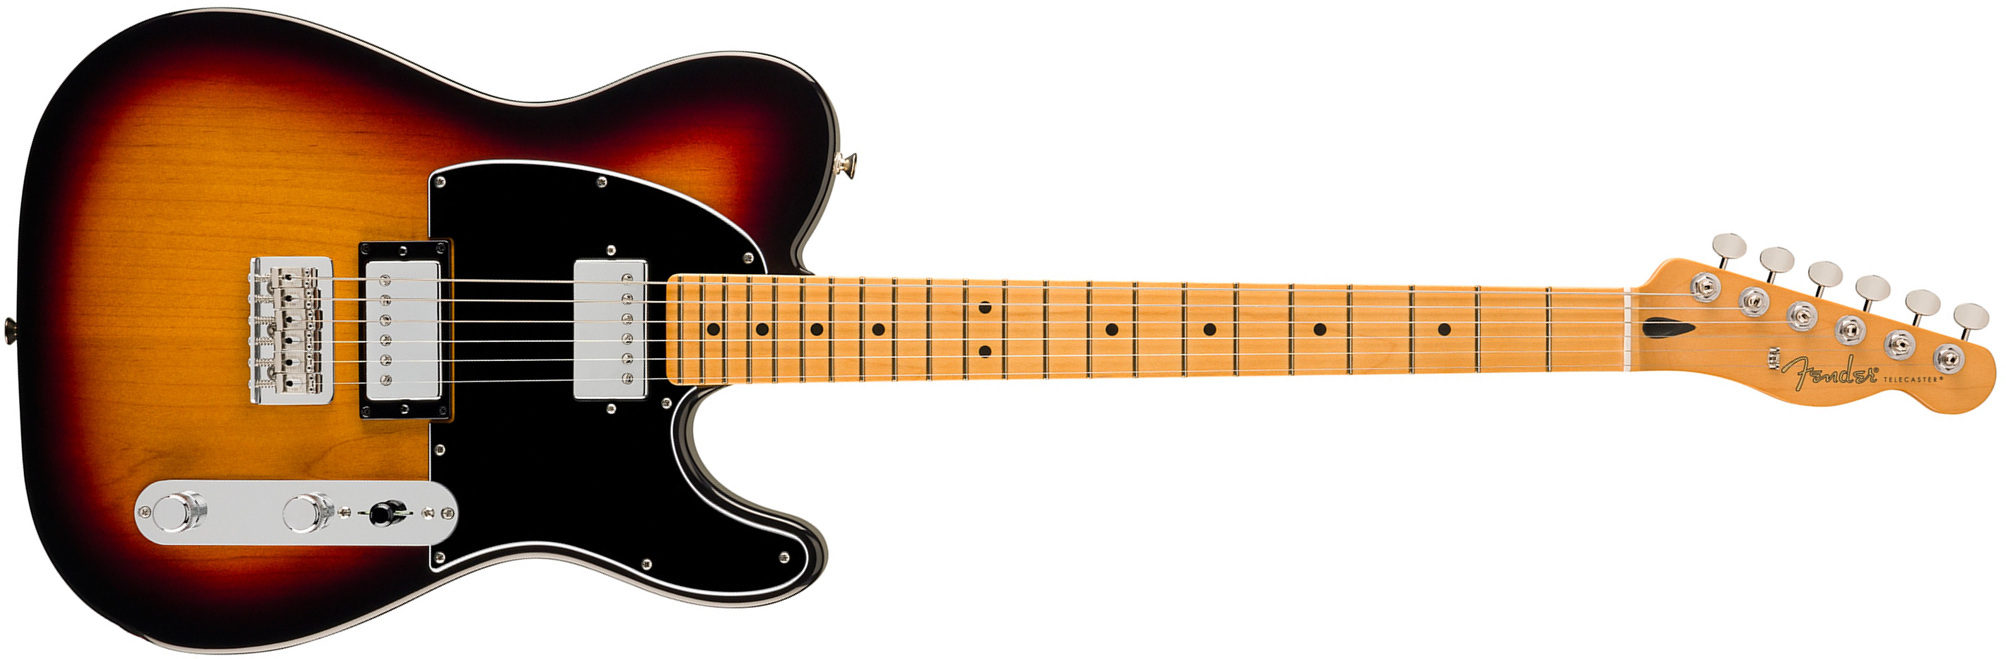 Fender Tele Player Ii Hh Mex 2h Ht Rw - 3-color Sunburst - Televorm elektrische gitaar - Main picture